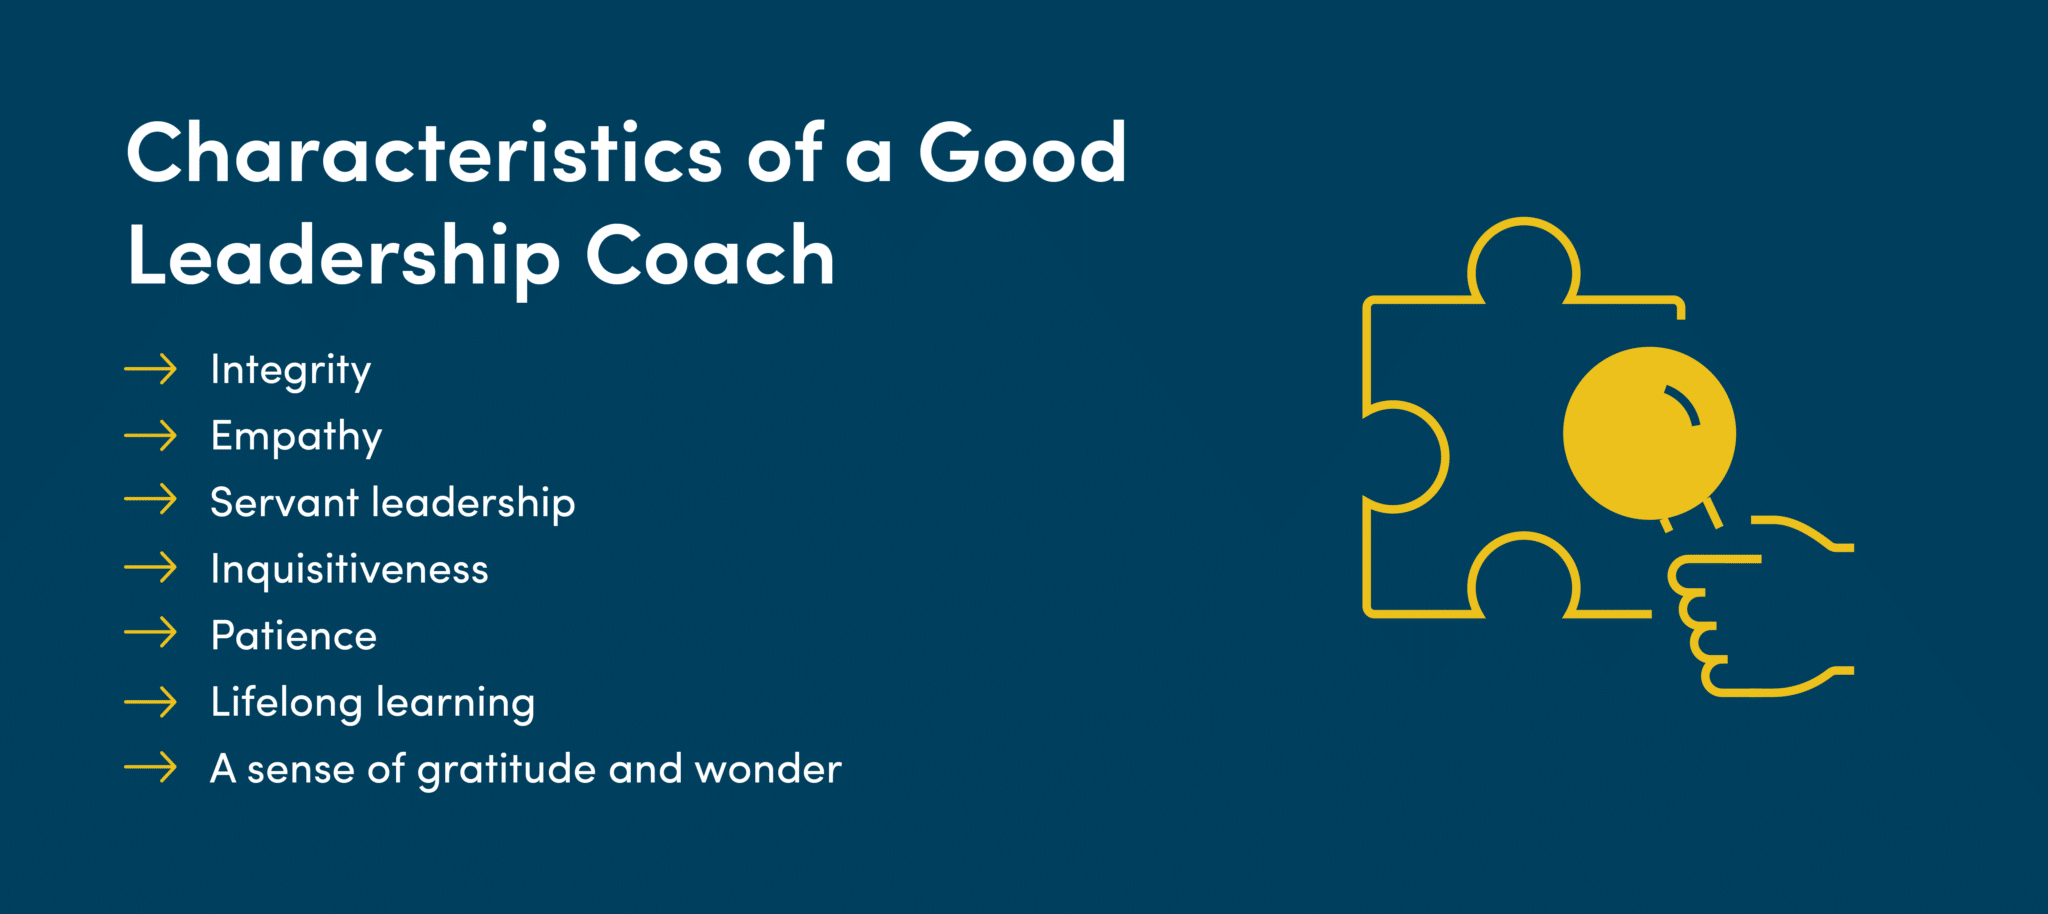 Characteristics of a good leadership coach